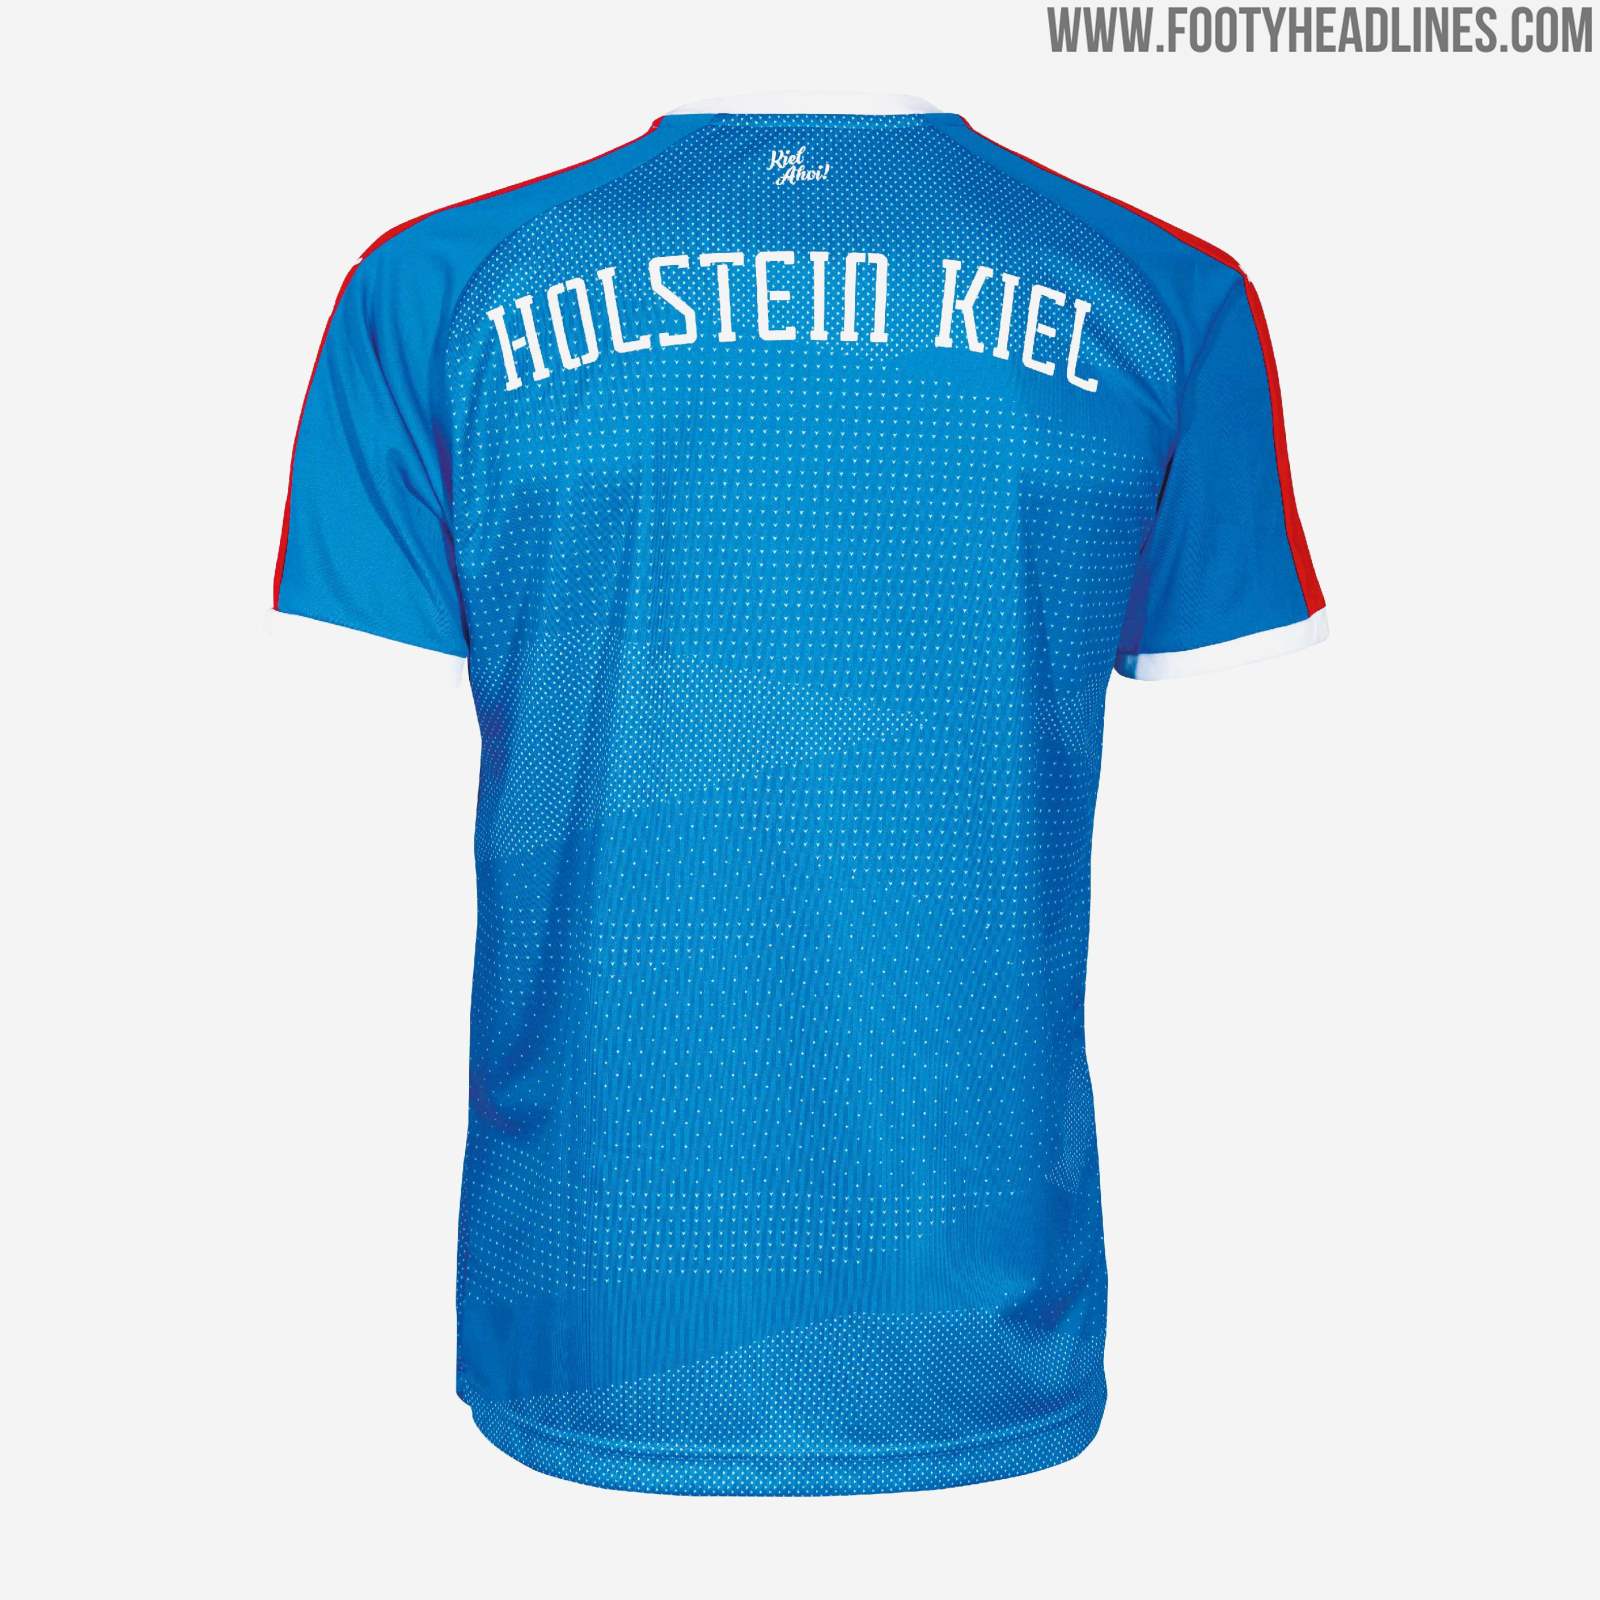 Holstein Kiel 19-20 Home Kit Released - Footy Headlines